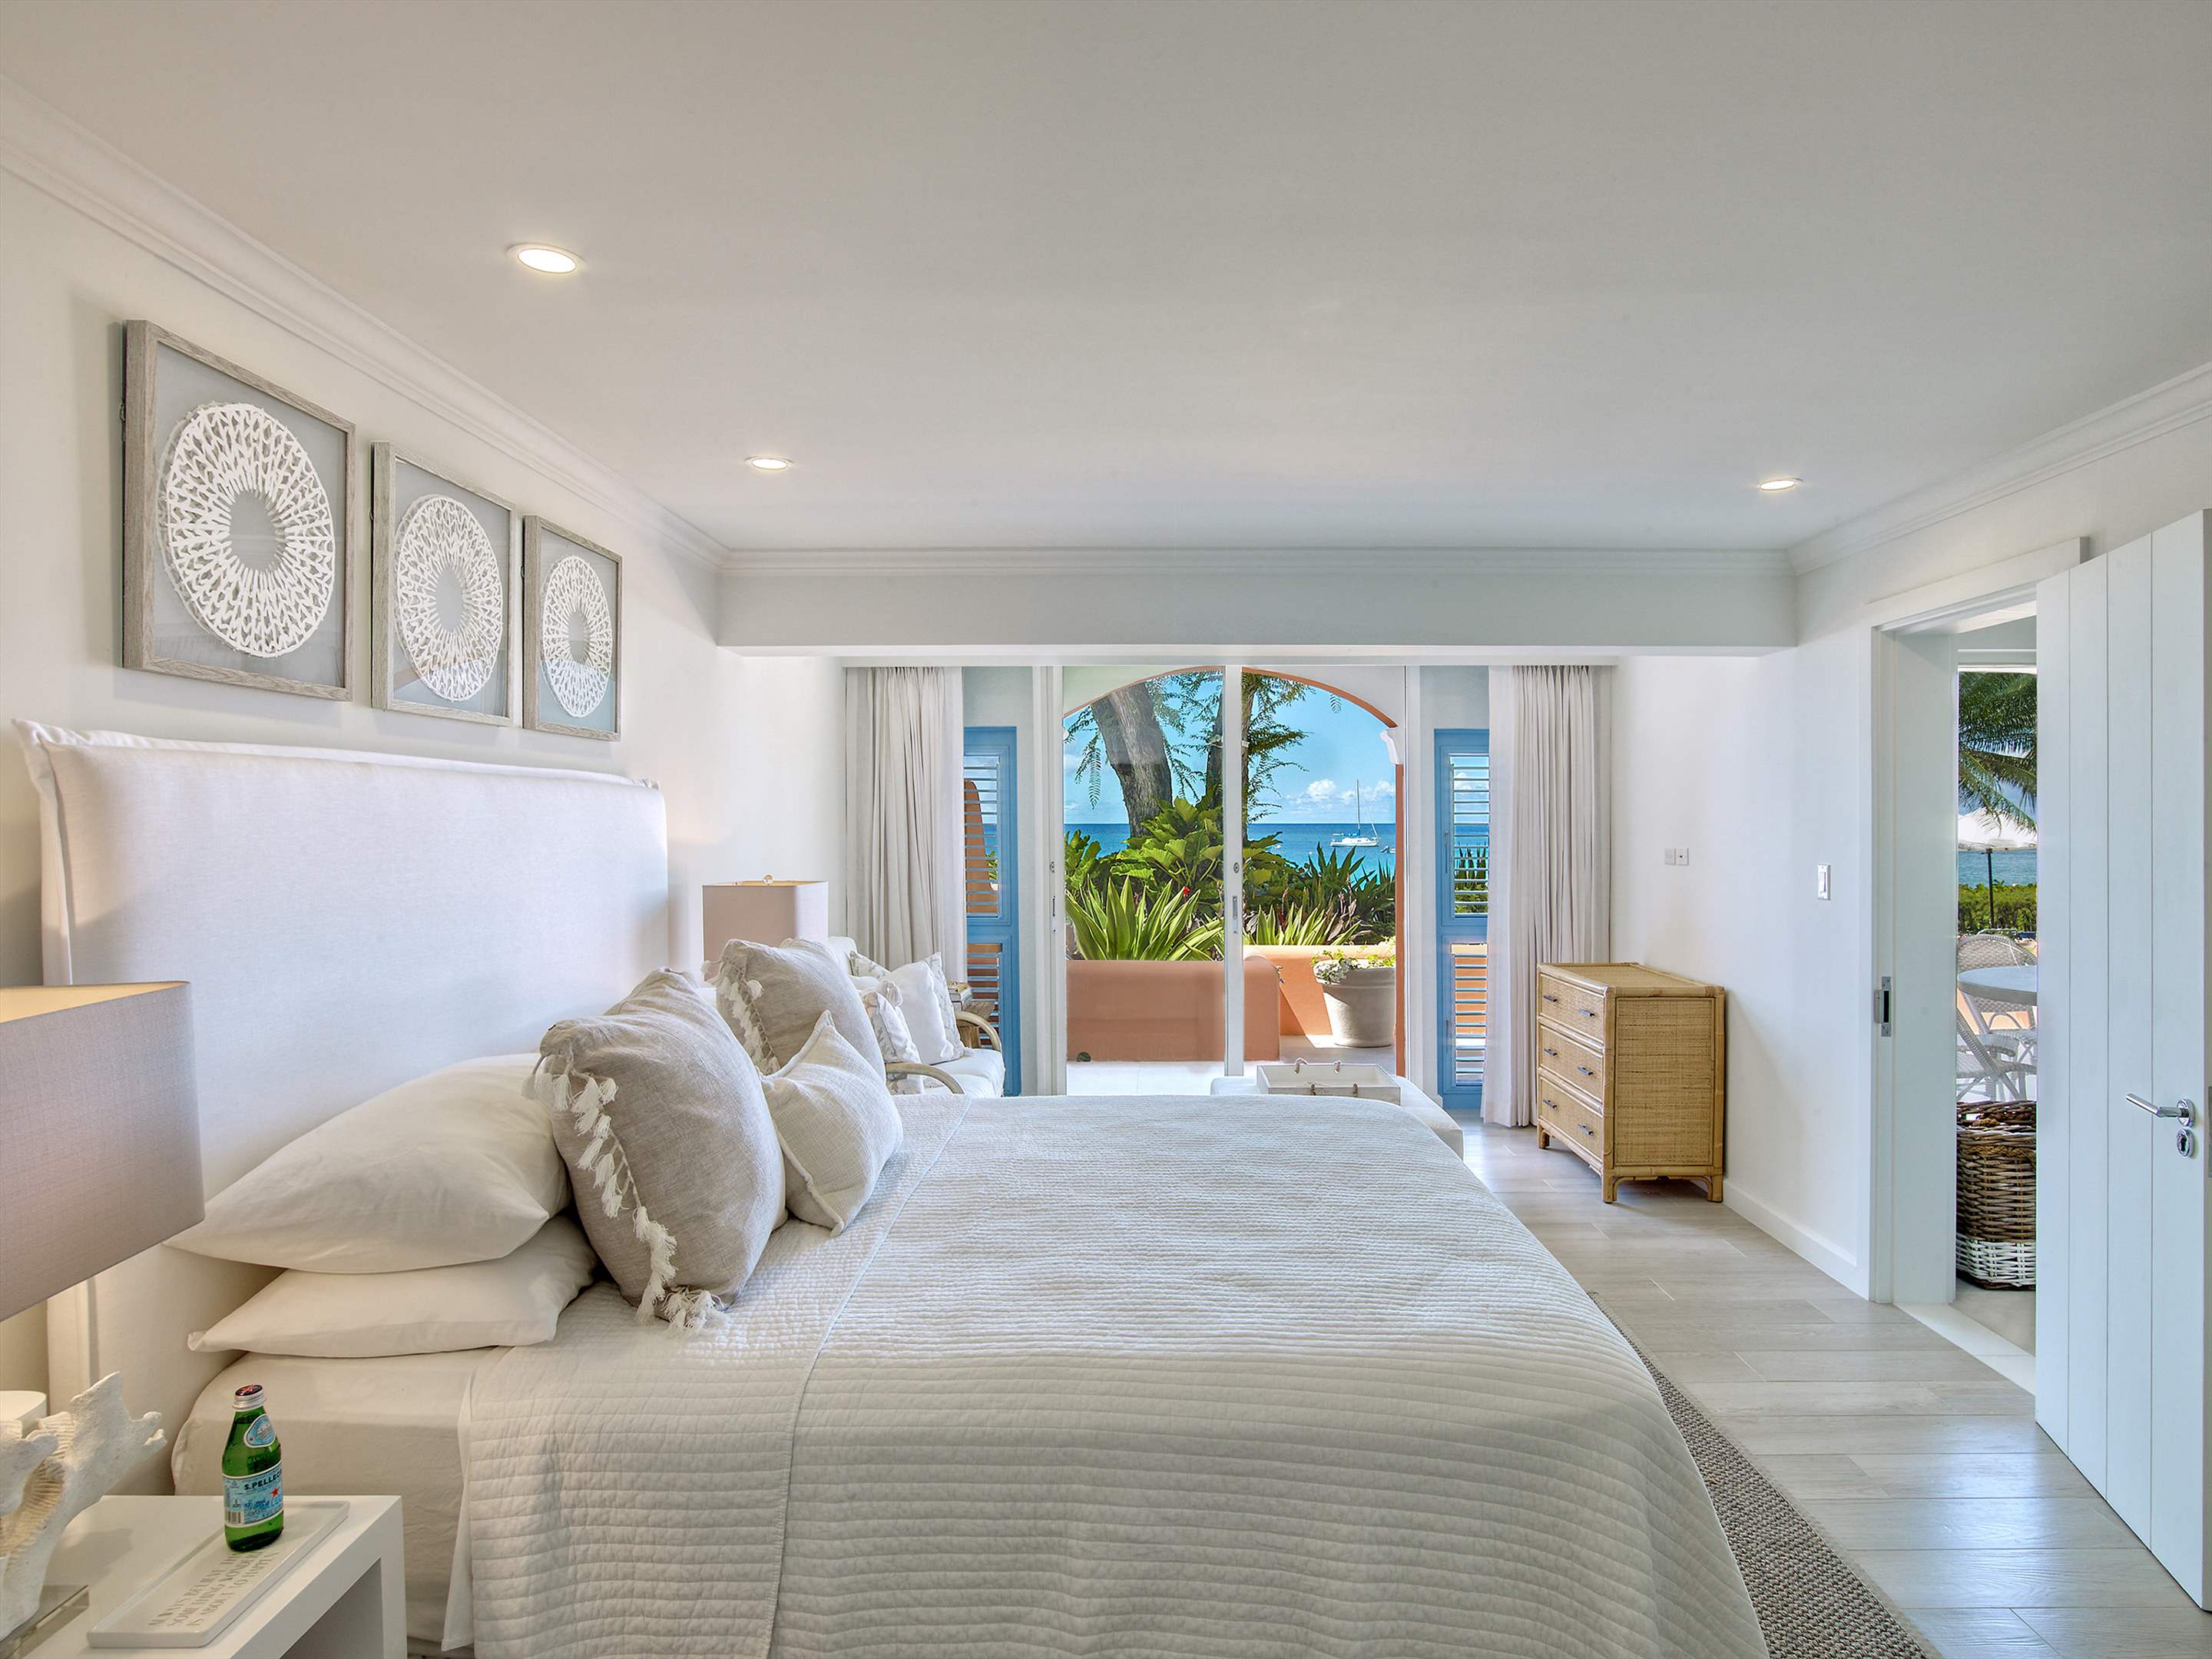 Villas on the Beach 102 , 3 bedroom, 3 bedroom apartment in St. James & West Coast, Barbados Photo #9